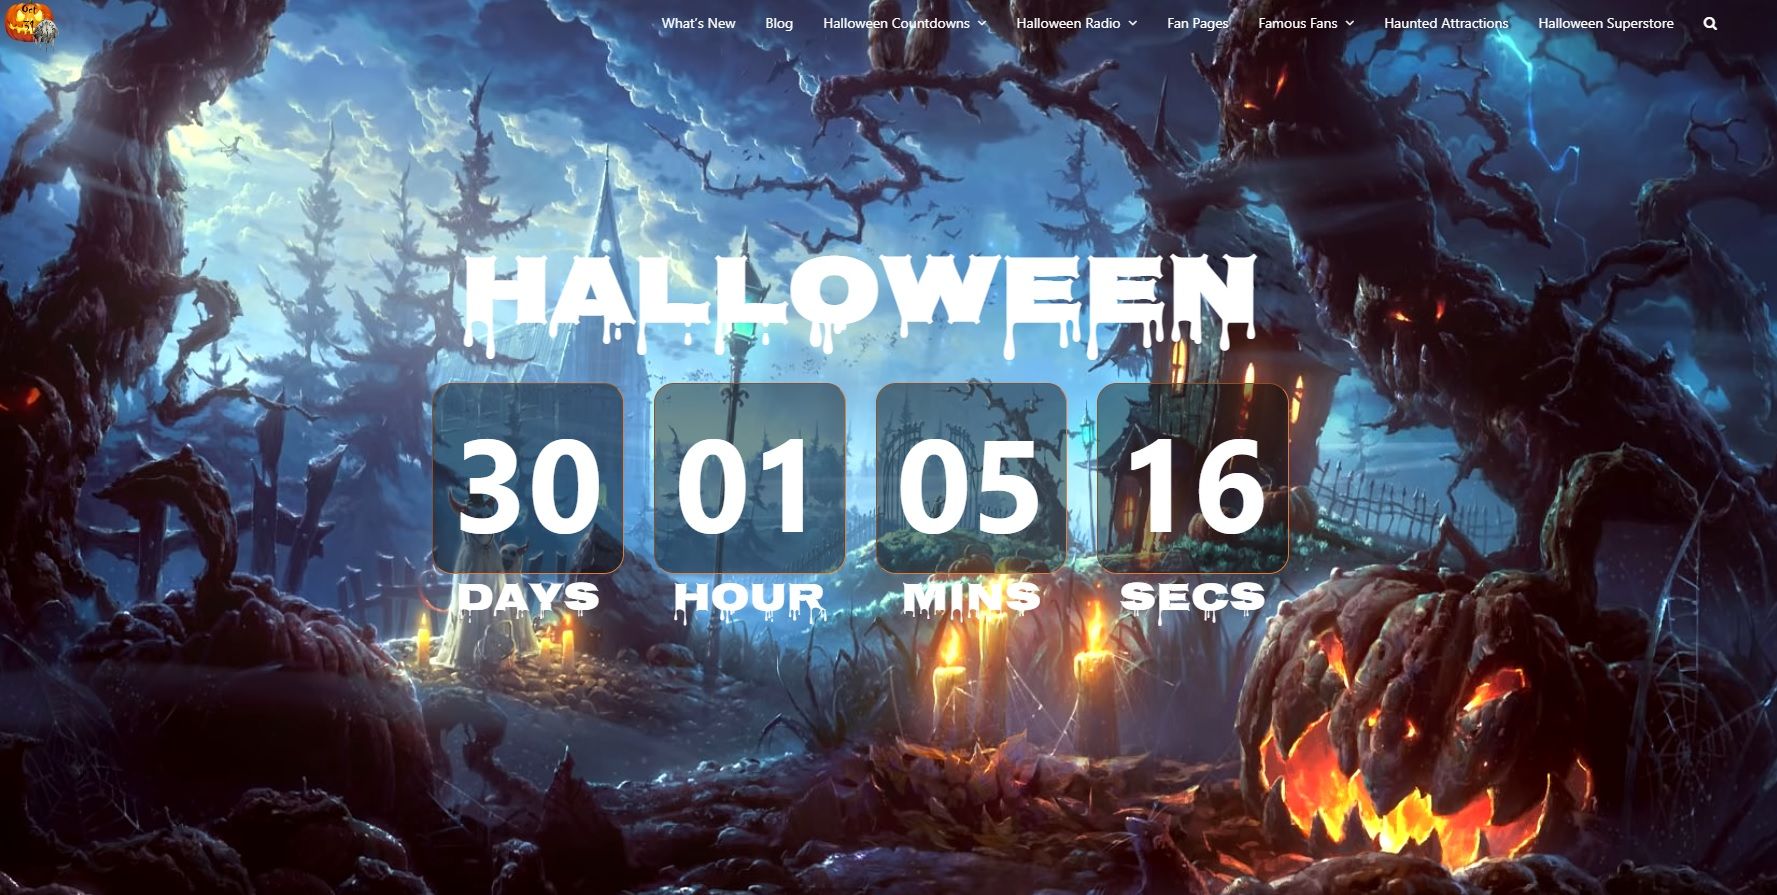 Halloween Countdown Live homepage